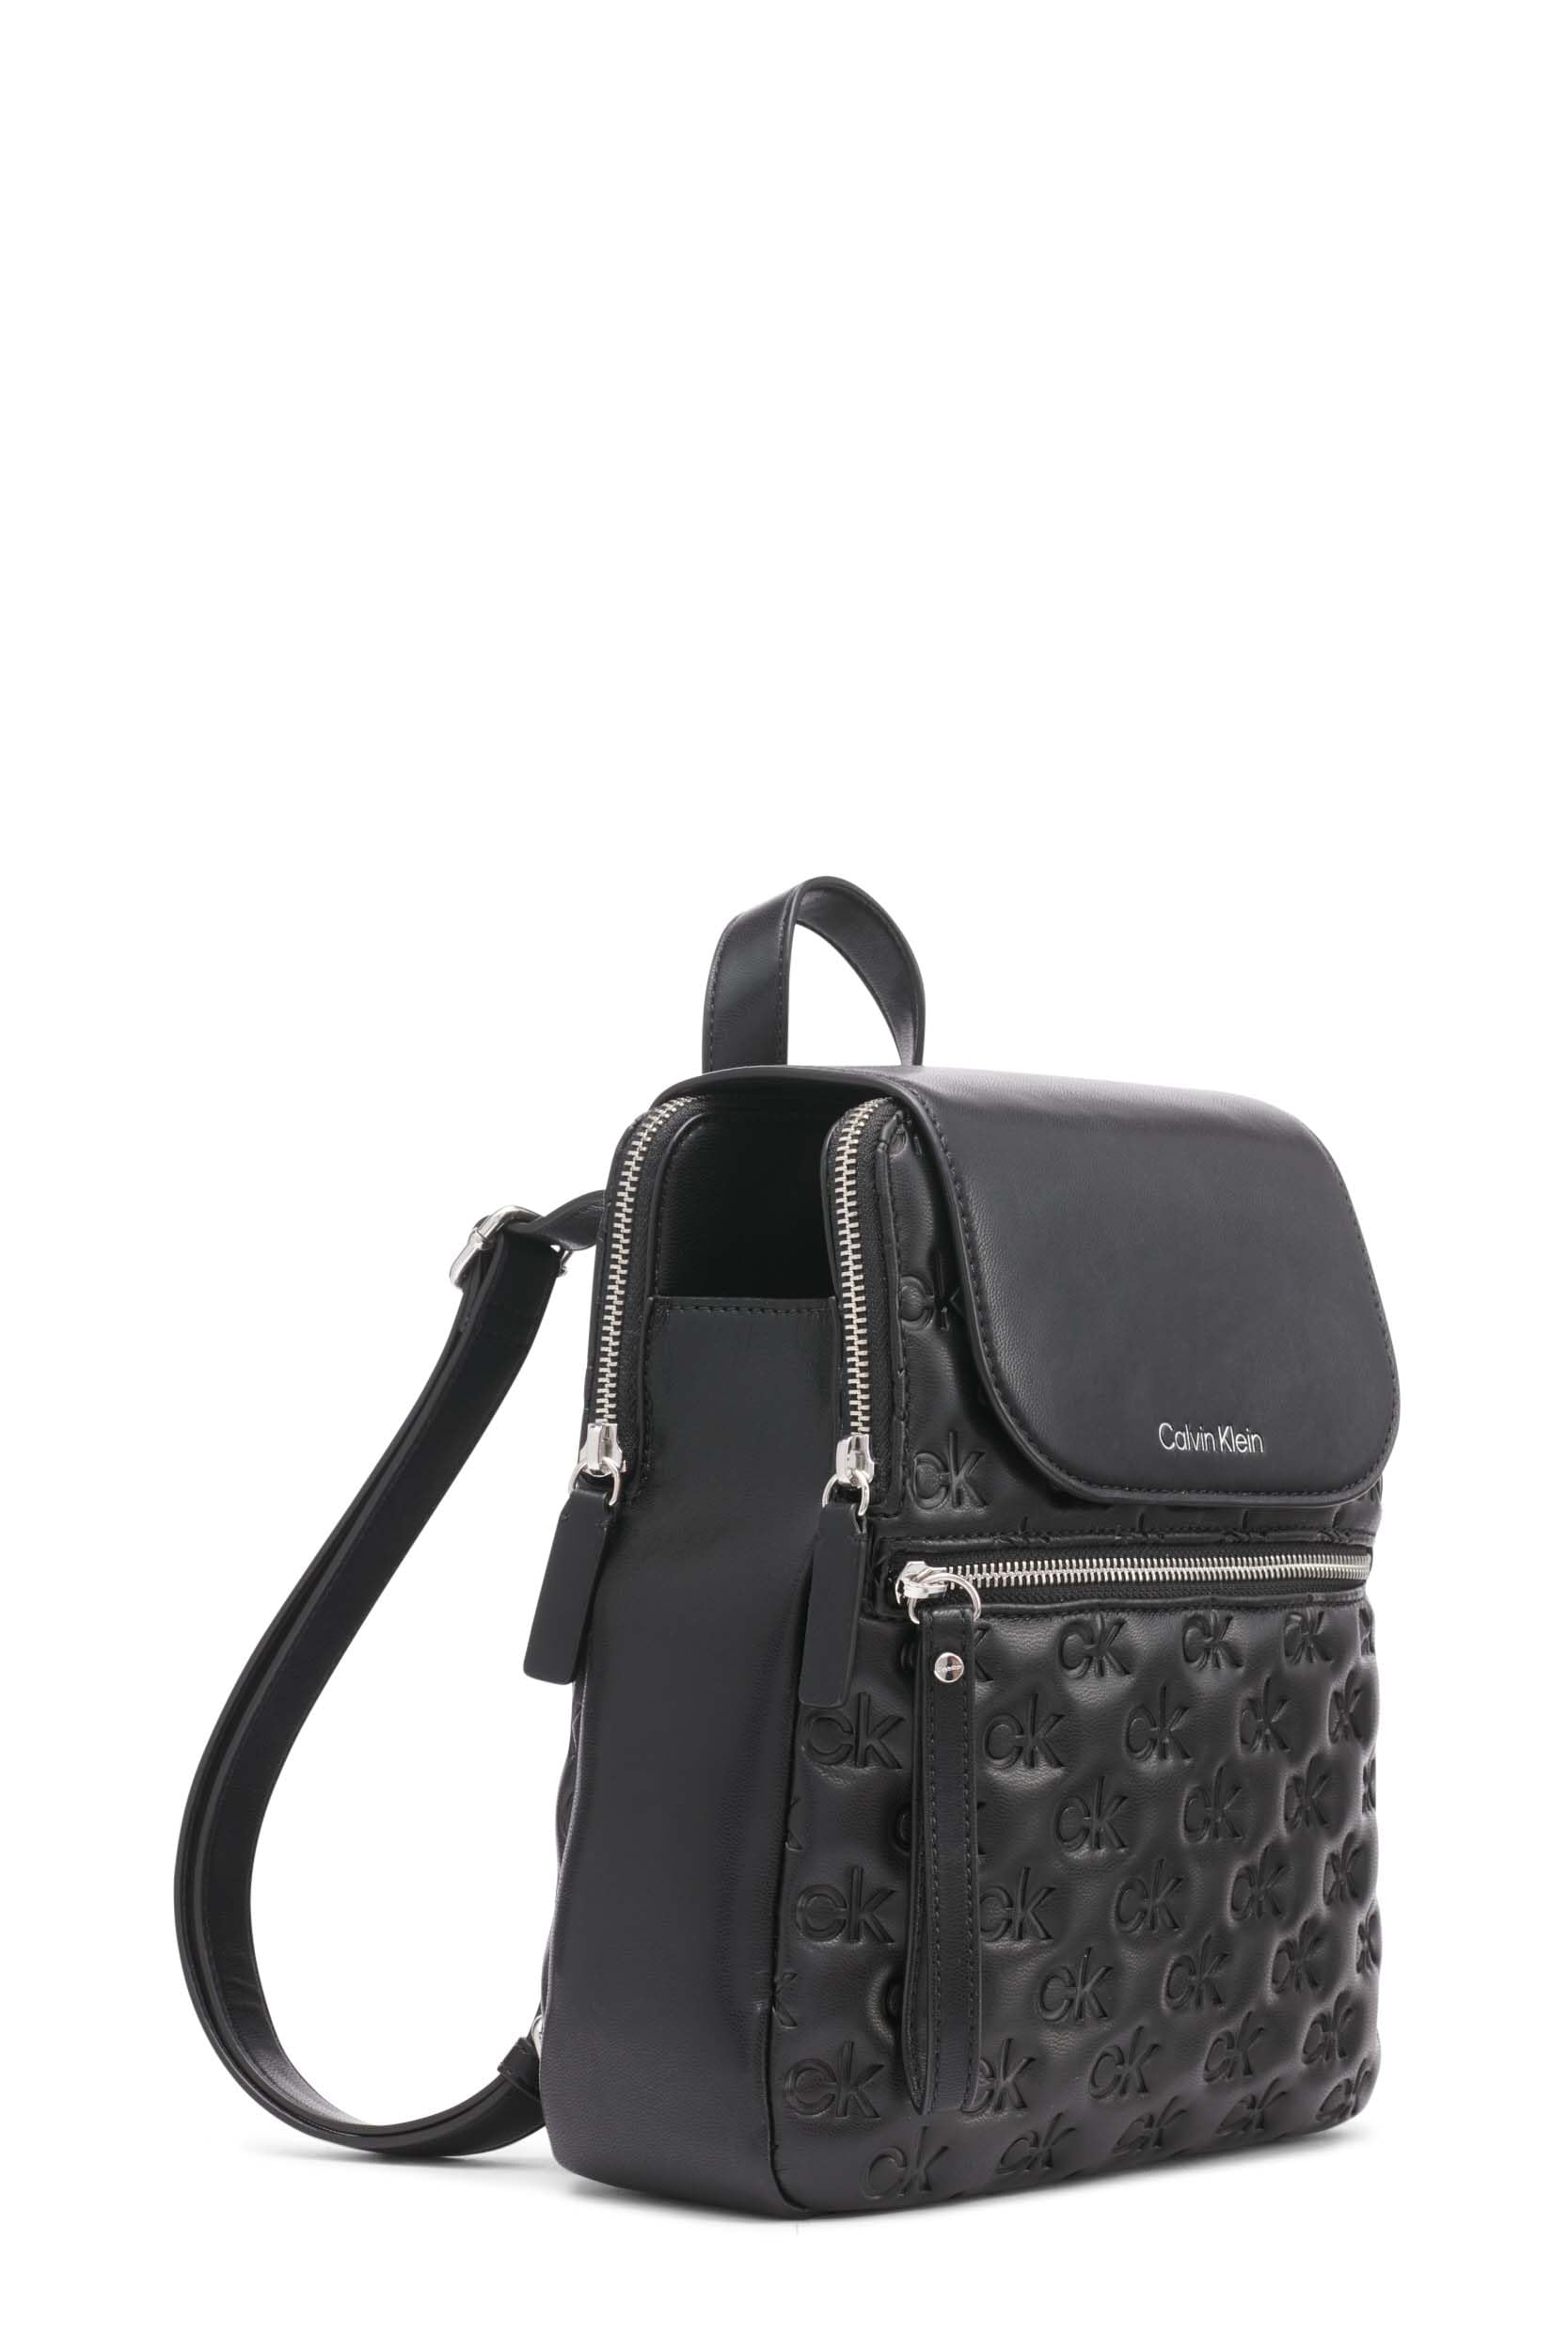 Calvin Klein Women's Reyna Signature Key Item Flap Backpack